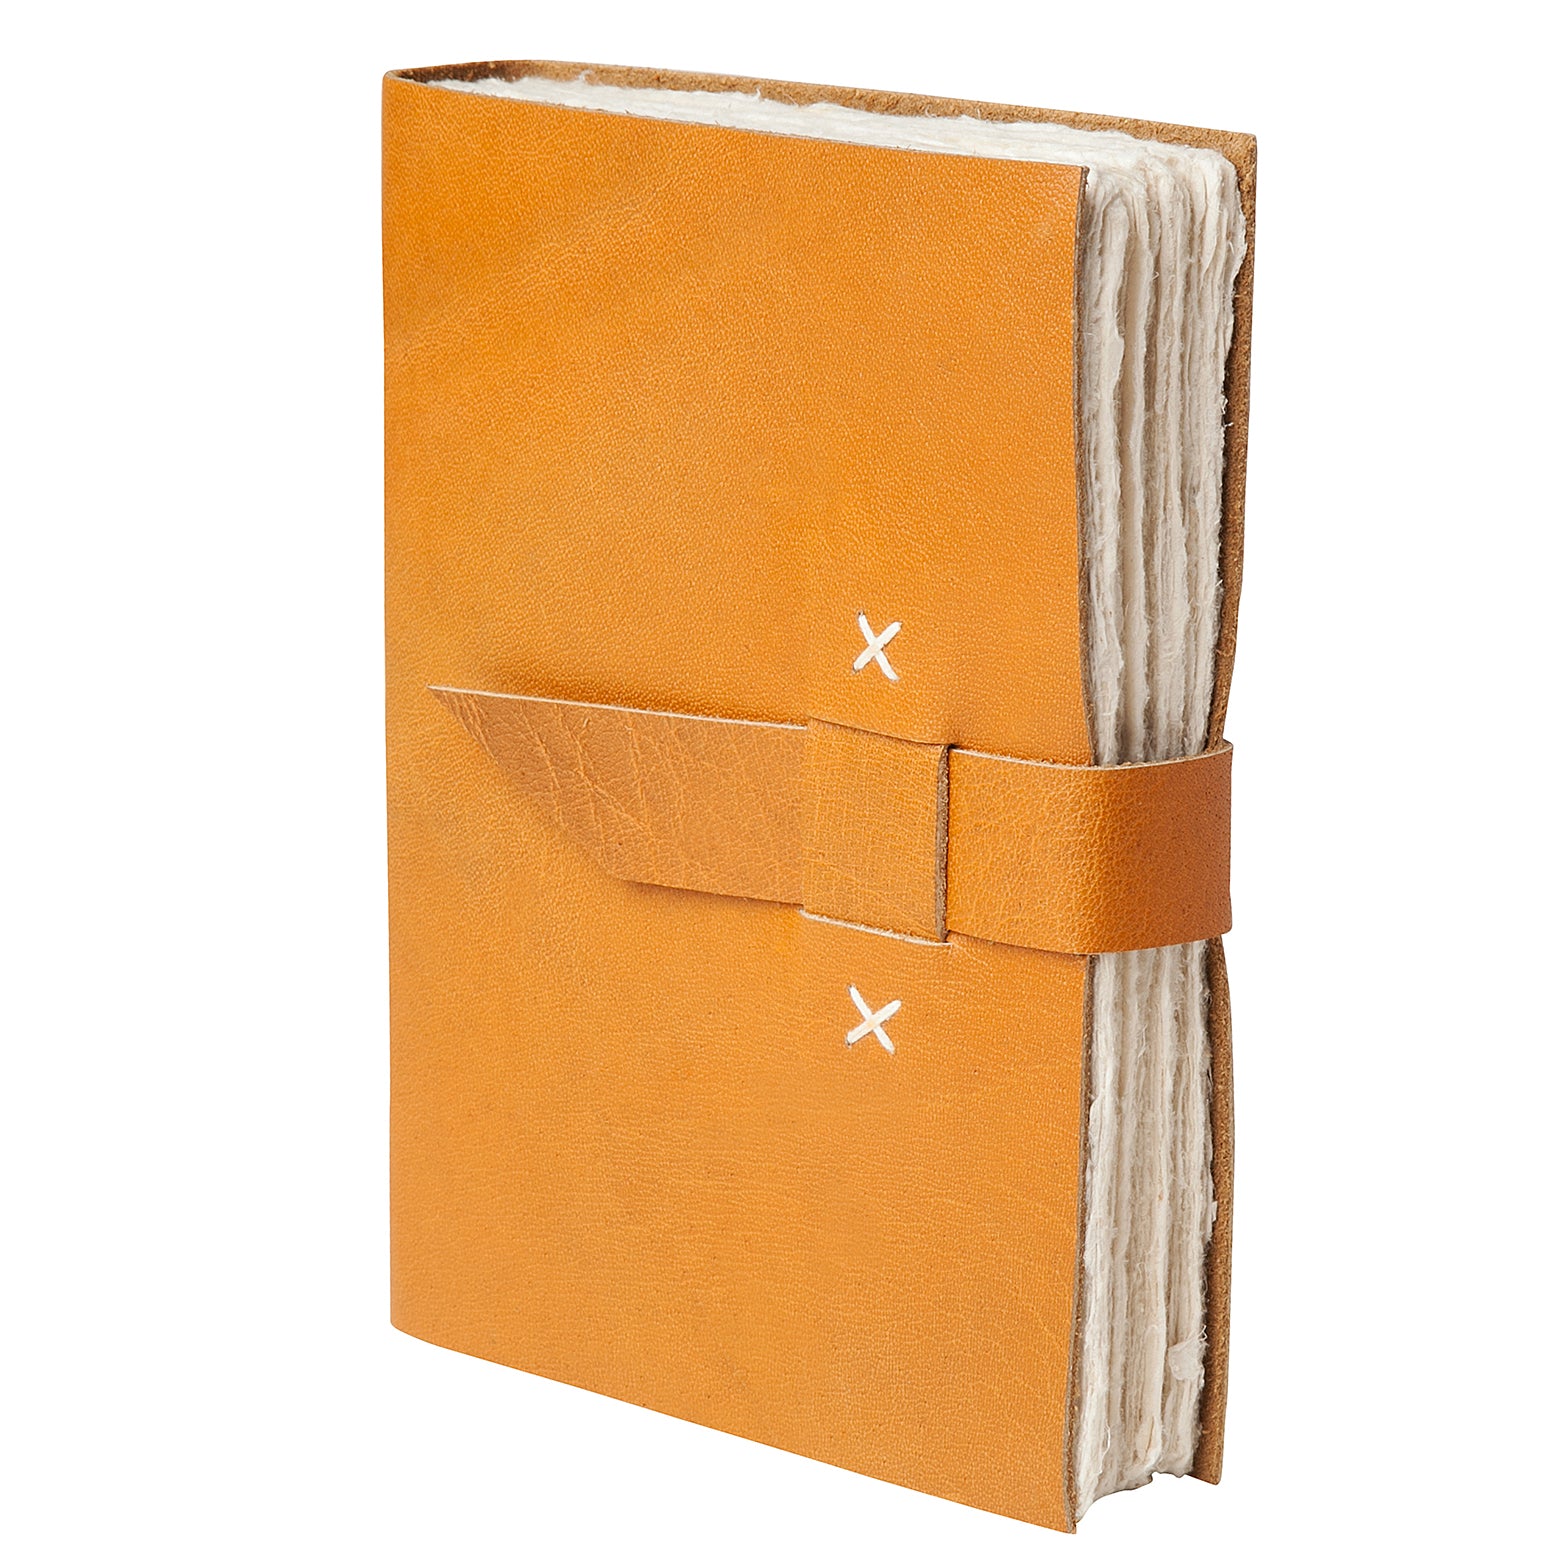 Hand-stitched Lokta Paper Journal